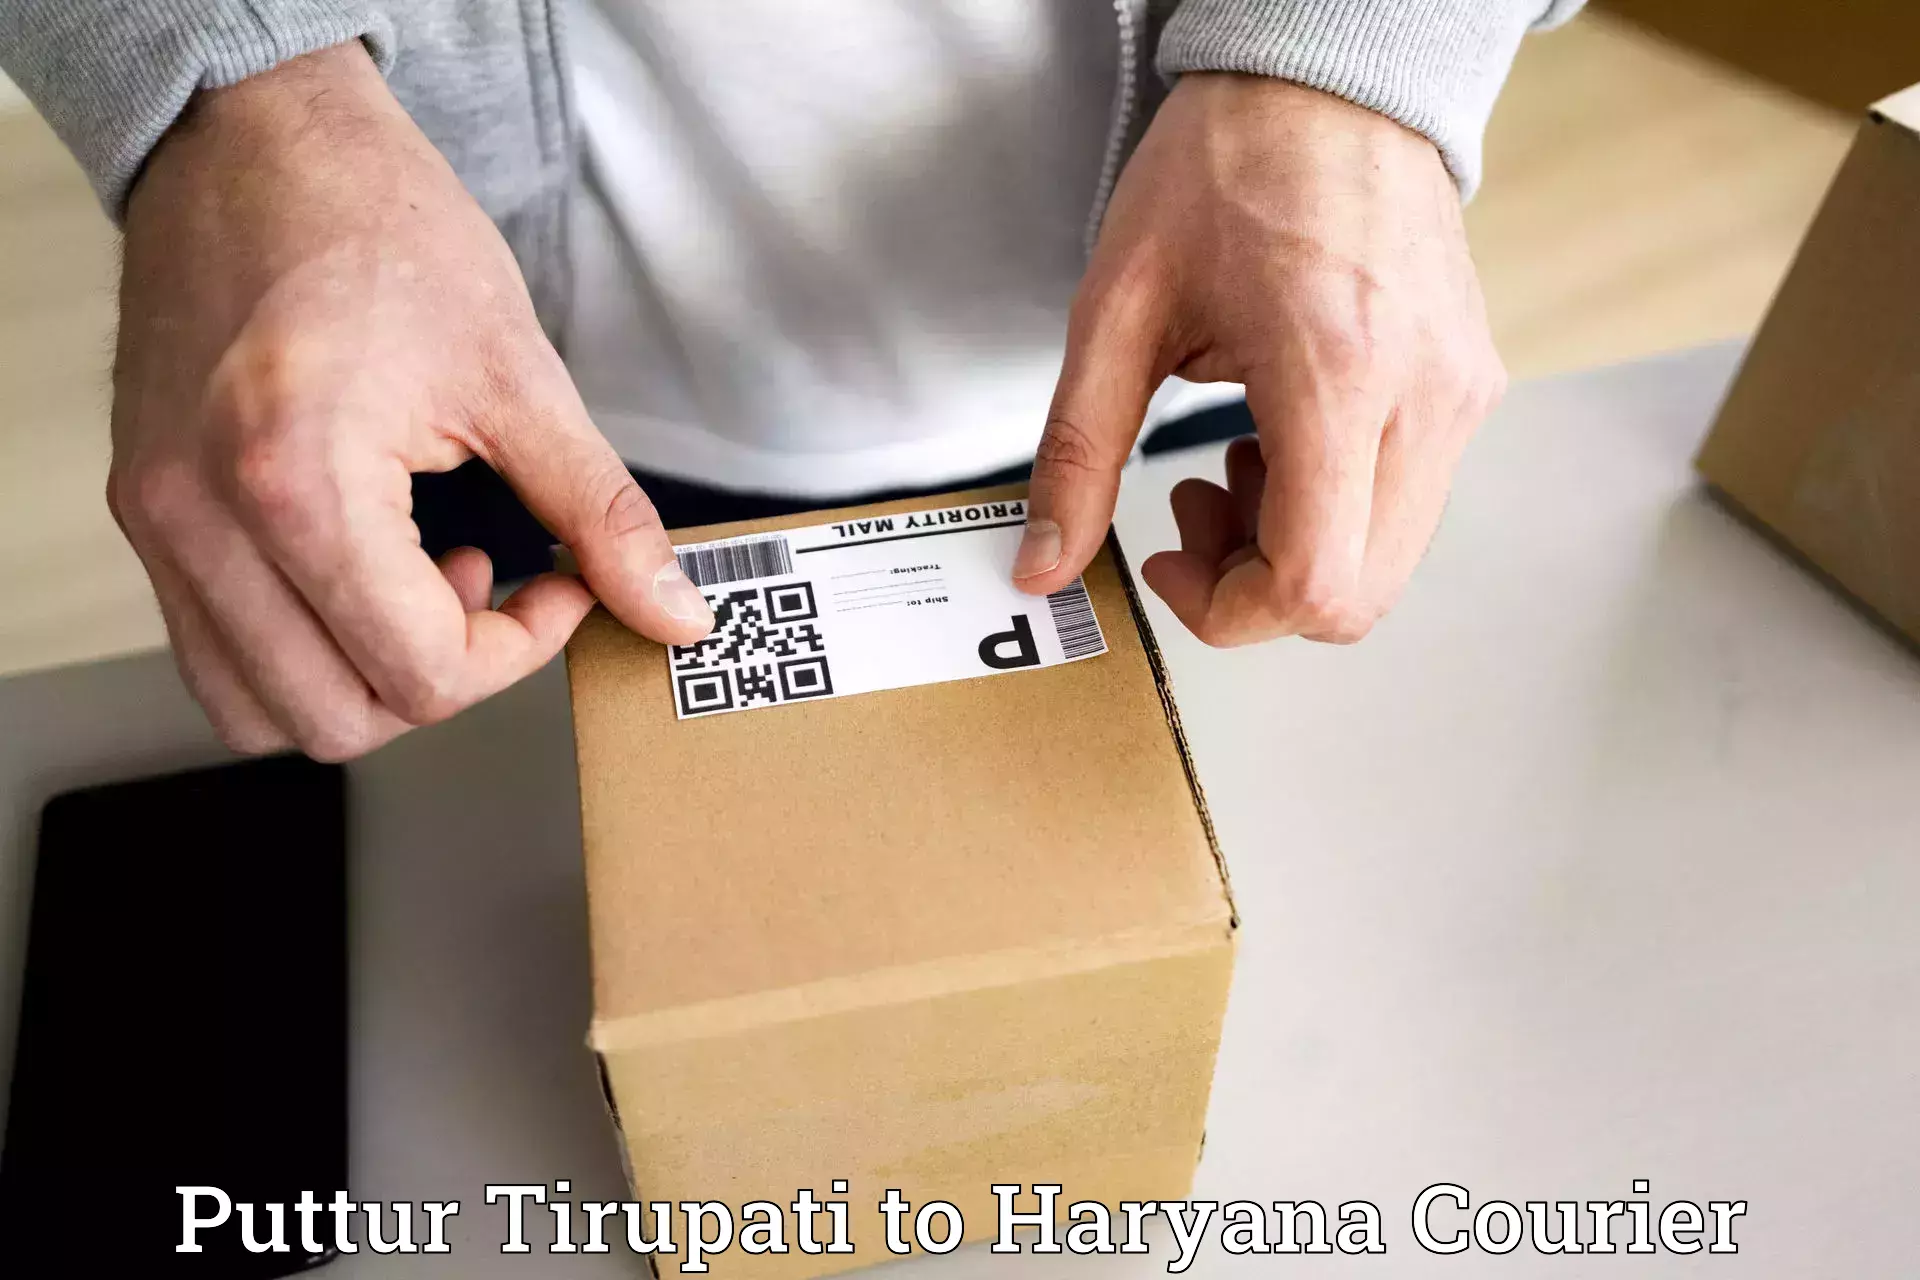 Urgent courier needs Puttur Tirupati to Bhiwani